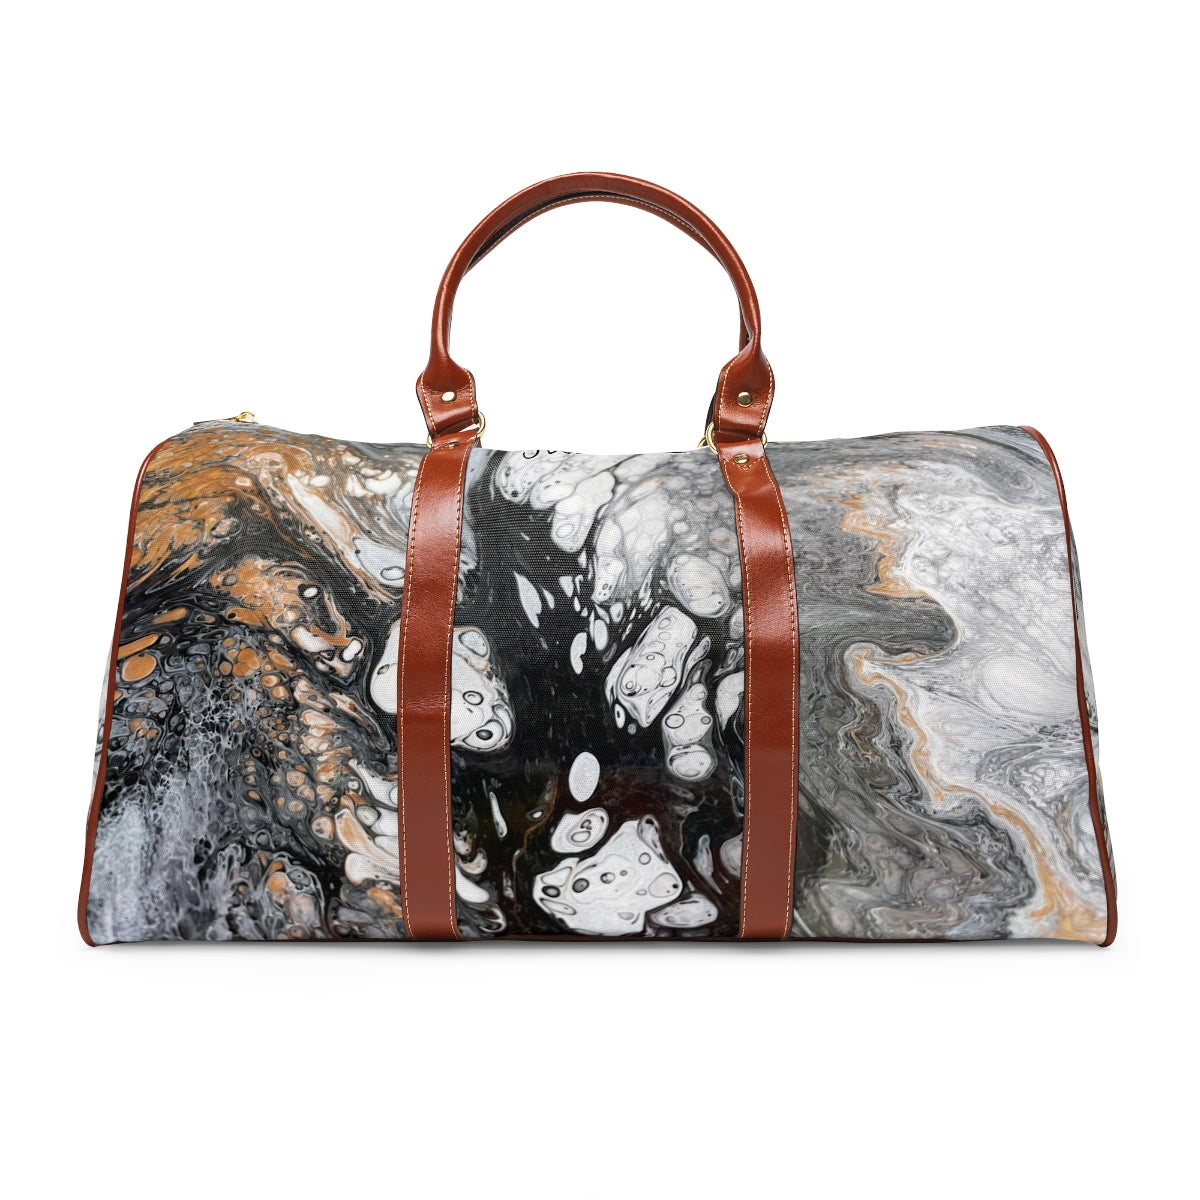 Waterproof Travel Bag - Lunar design